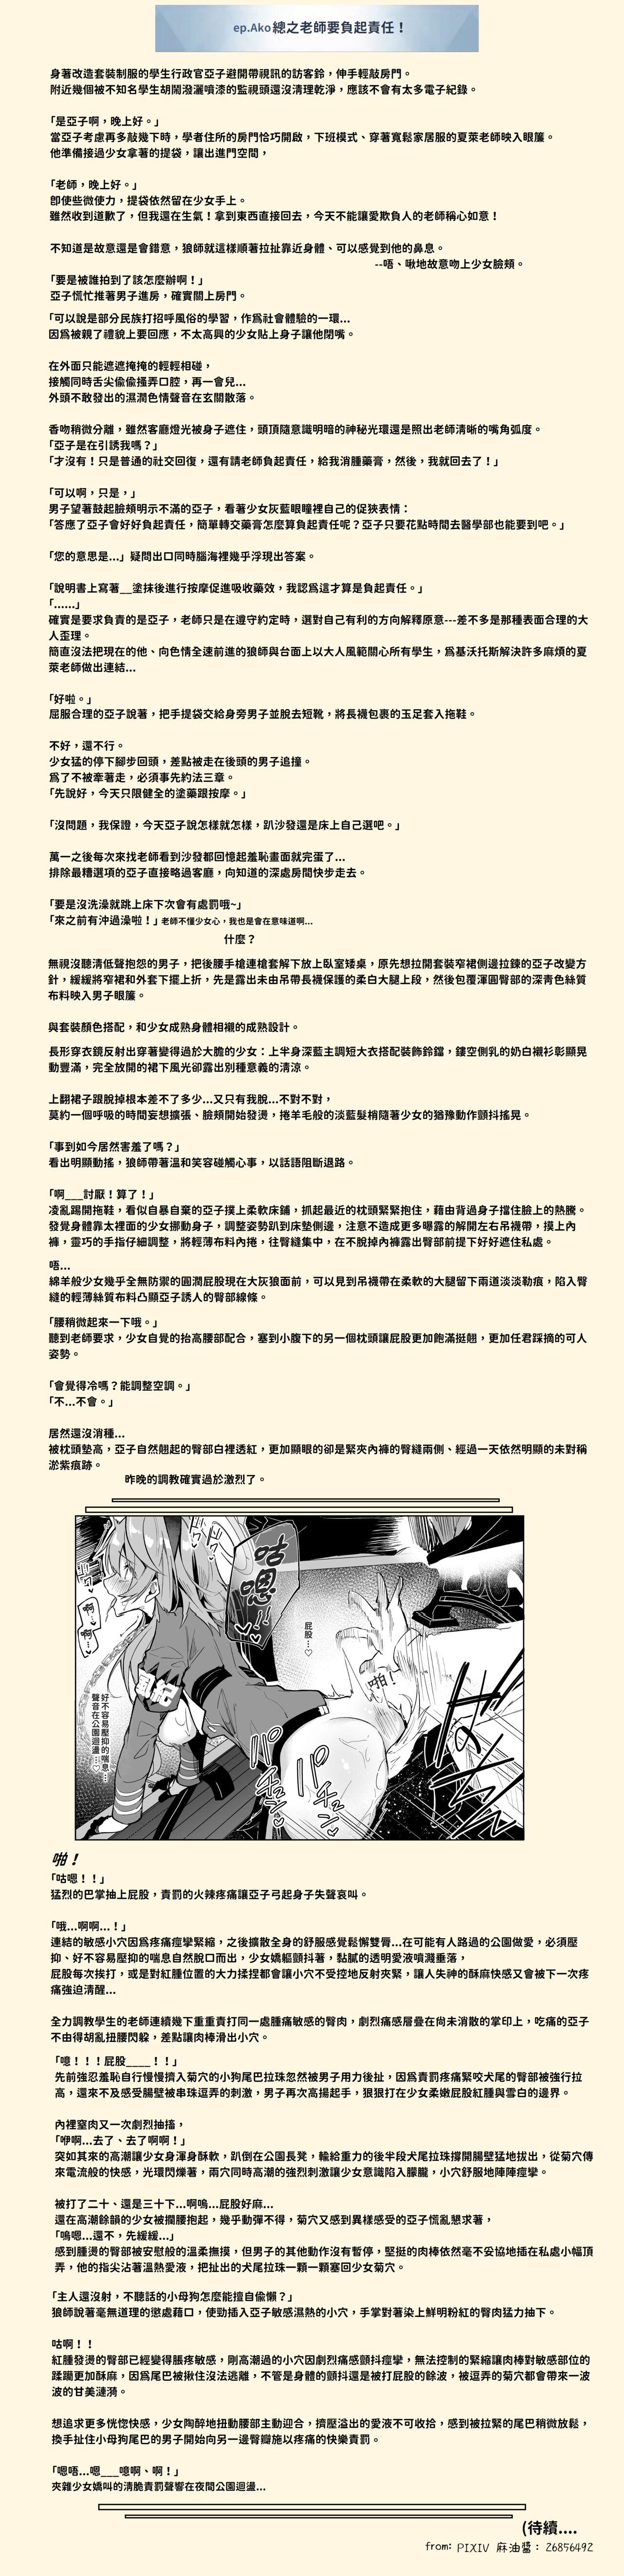 Tgirls アコちゃん調教ミニ漫画 - Blue archive Calcinha - Page 10